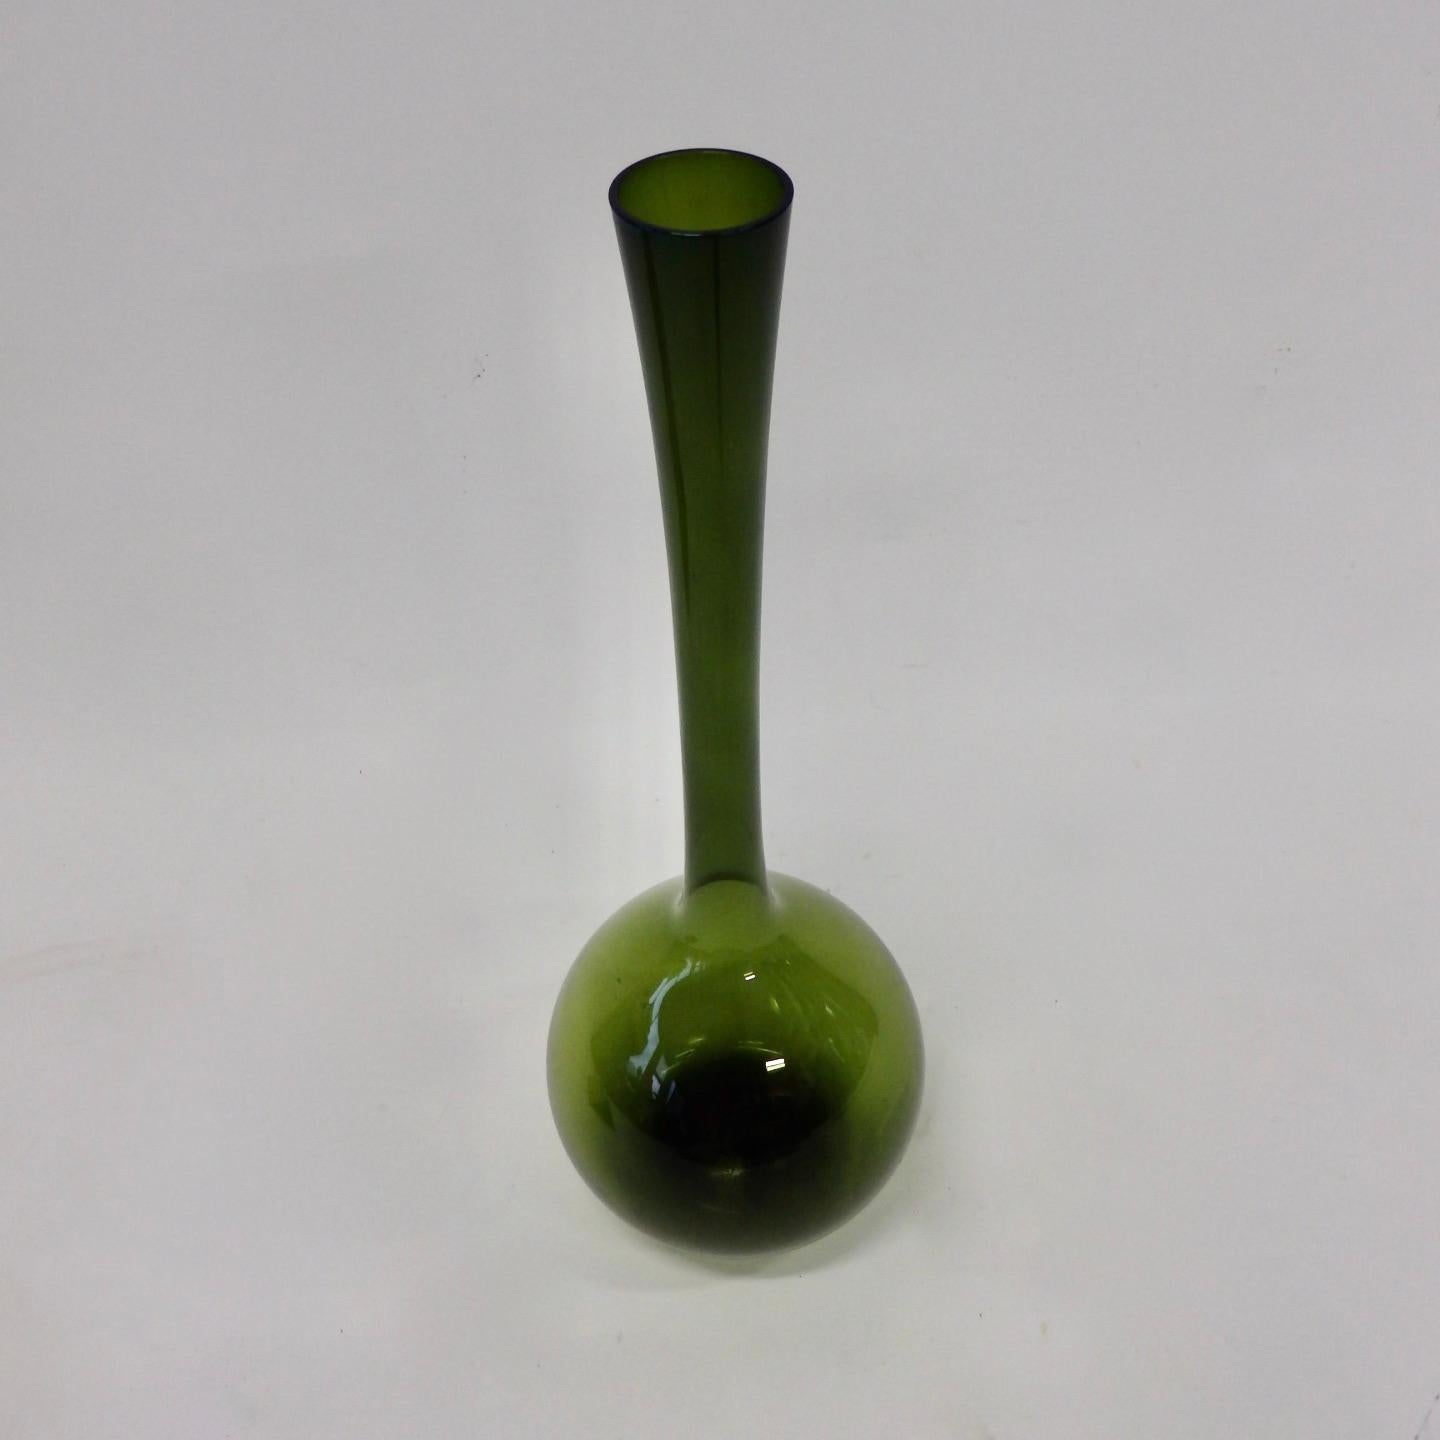 Arthur Percy bulbous base green glass bottle or vase. Manufactured by Gullaskruf.